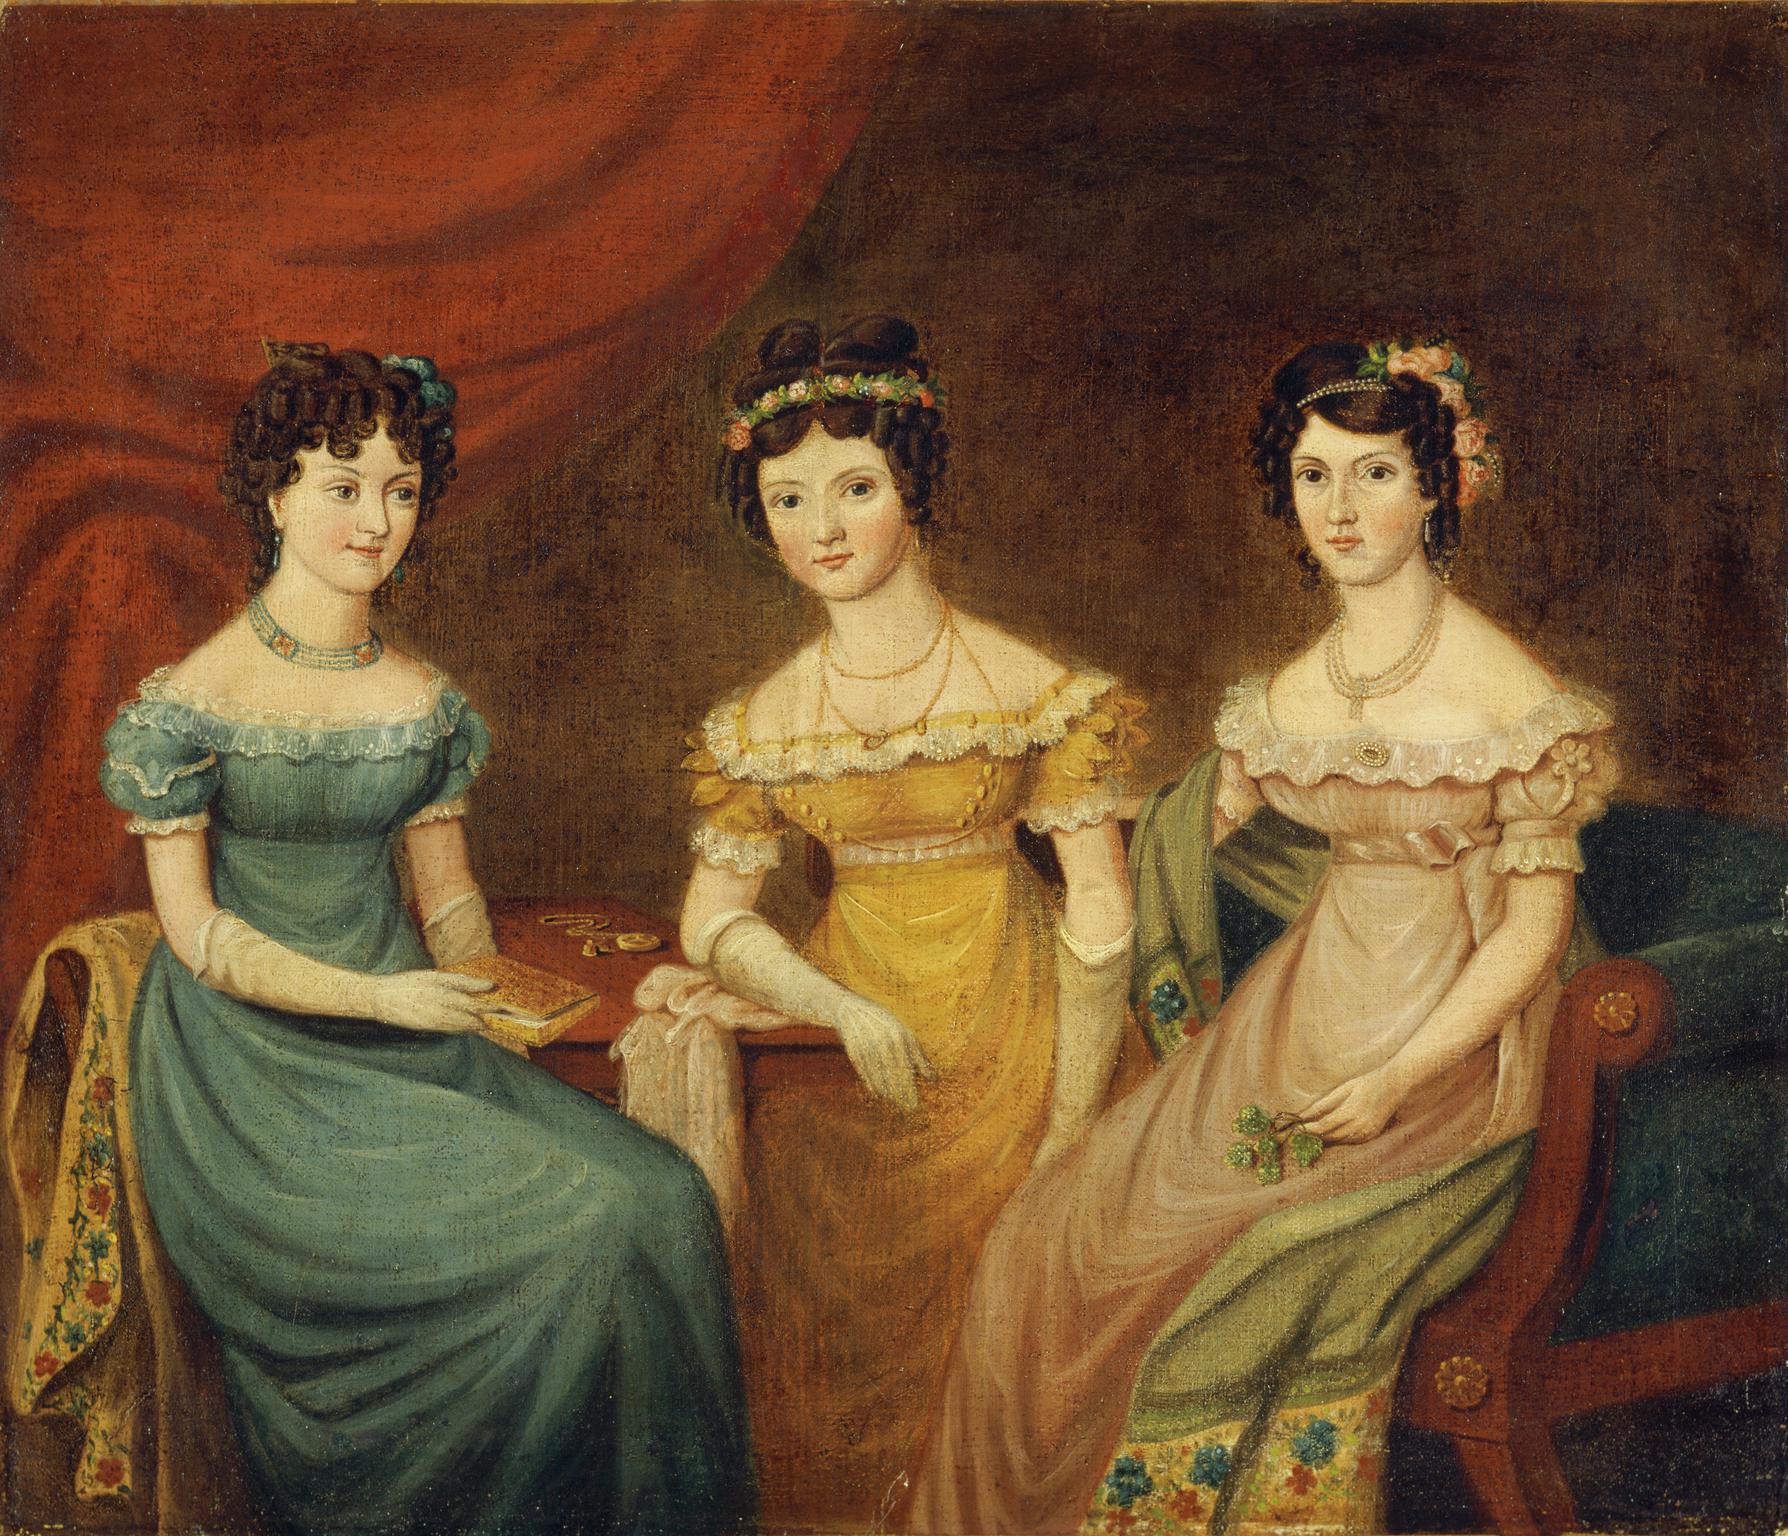 The three Hughes sisters